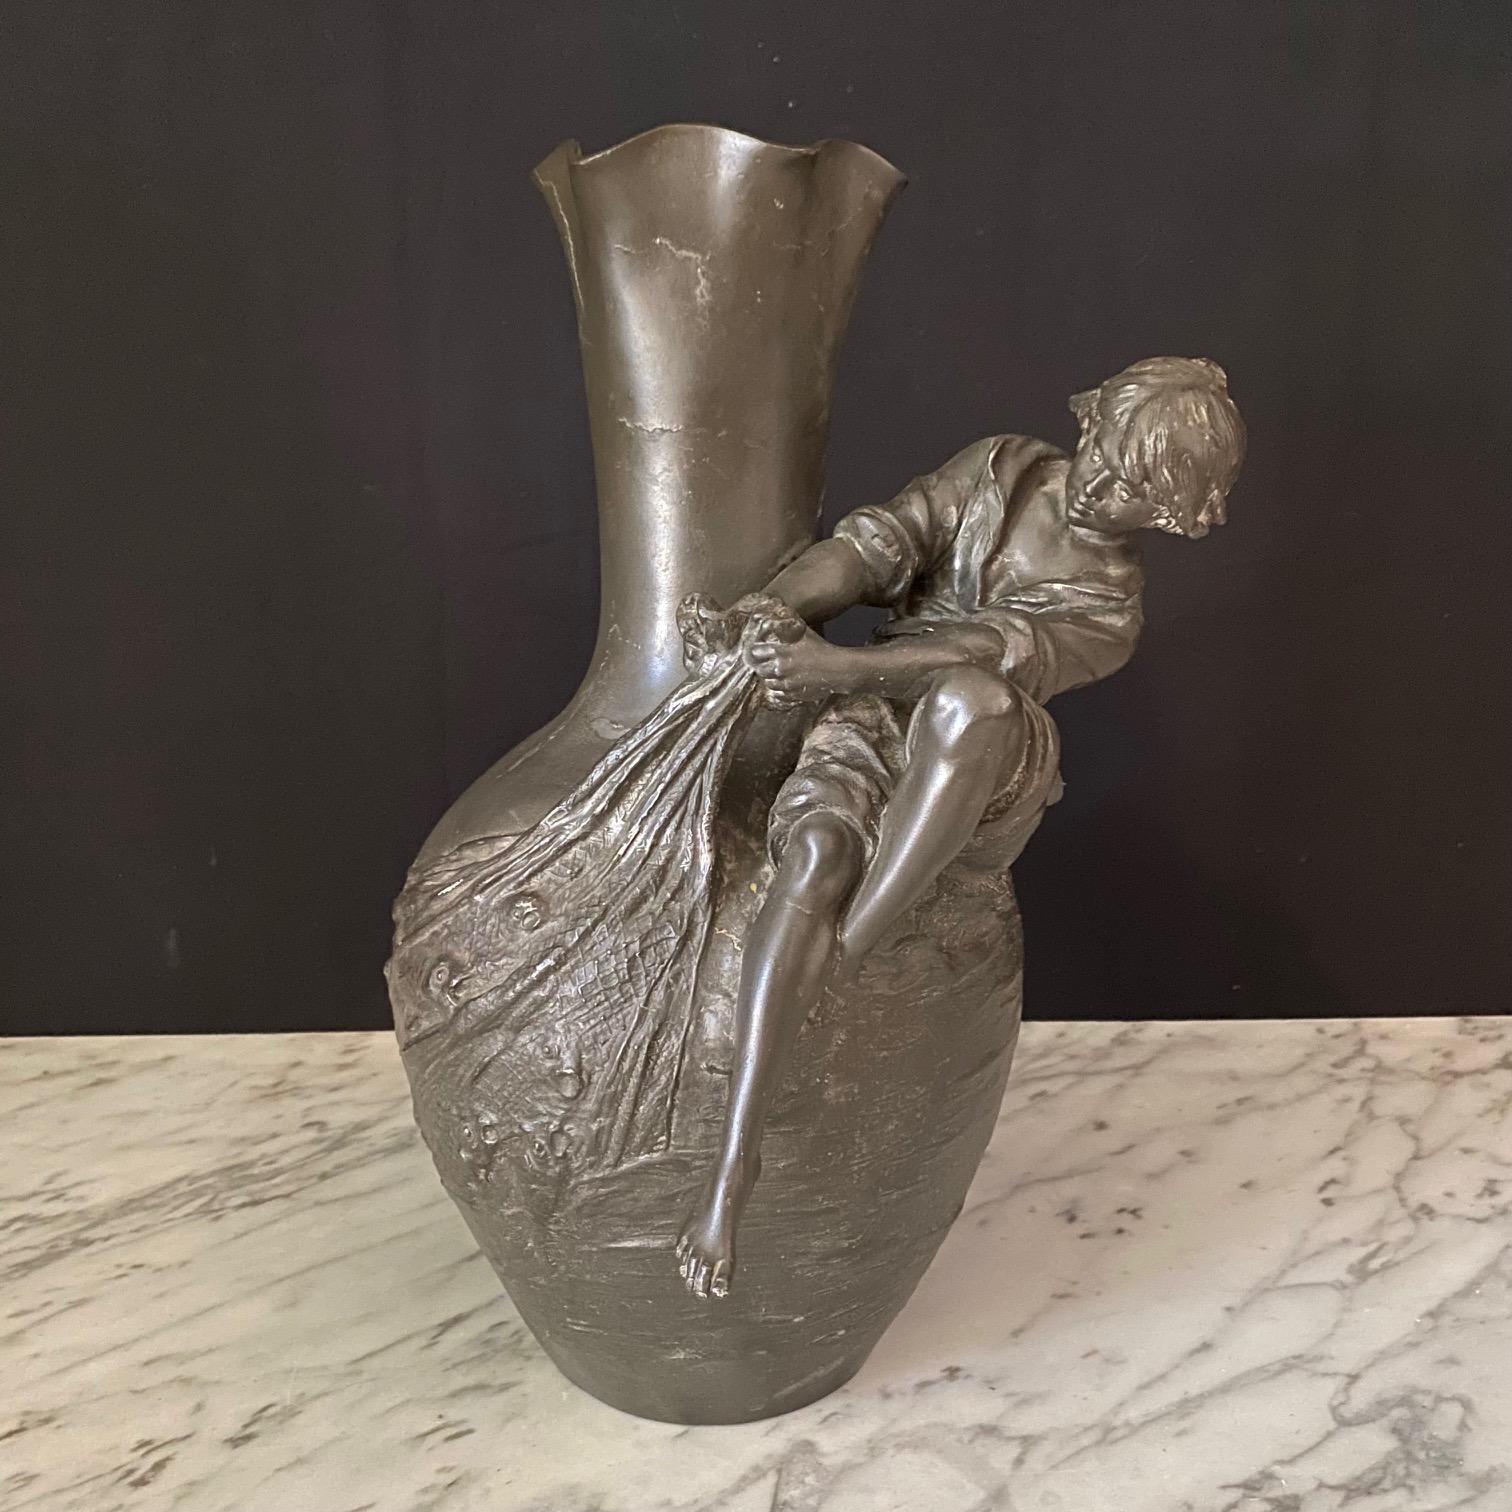  Auguste Moreau Pair of Signed French Art Nouveau Sculptural Vases For Sale 4